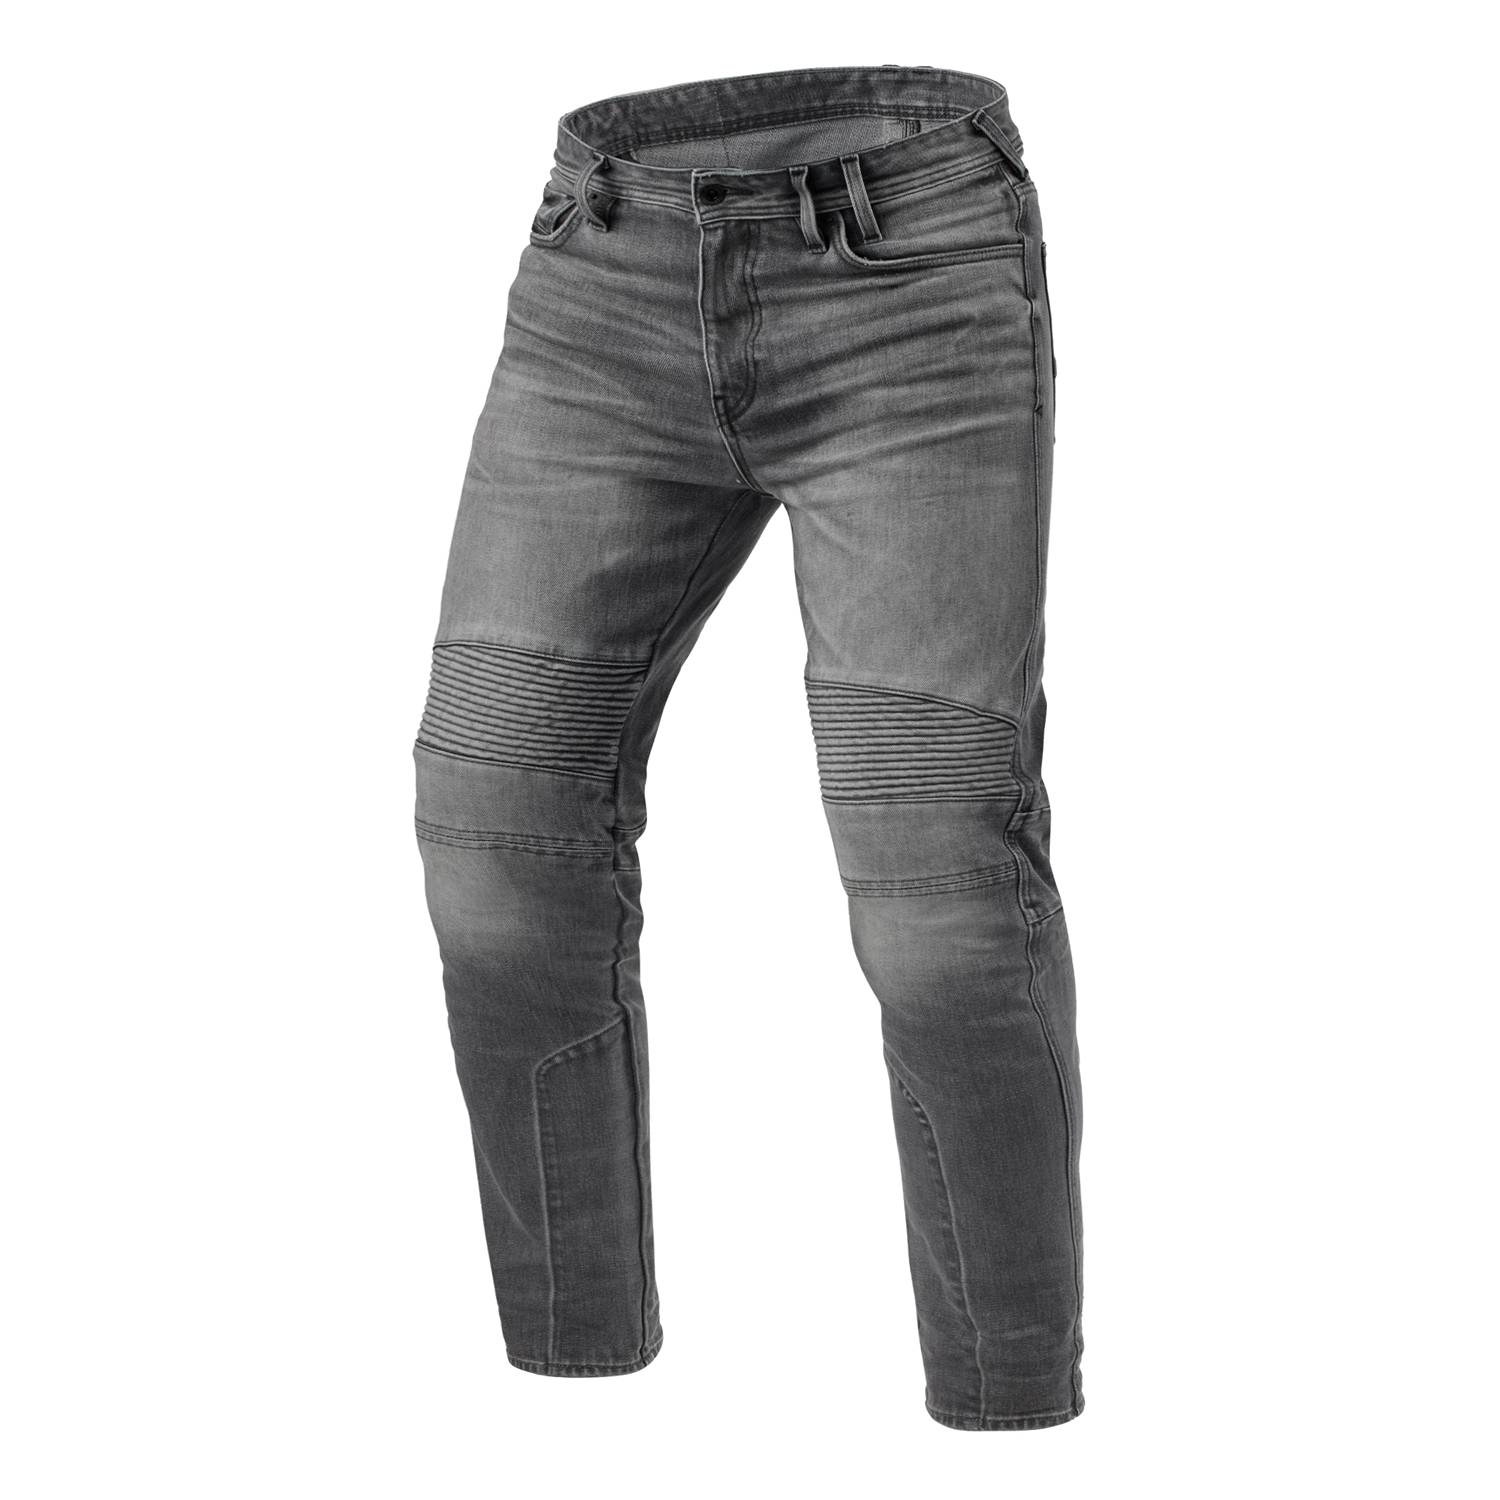 Image of REV'IT! Jeans Moto 2 TF Medium Grey Used L36 Motorcycle Jeans Size L36/W30 EN